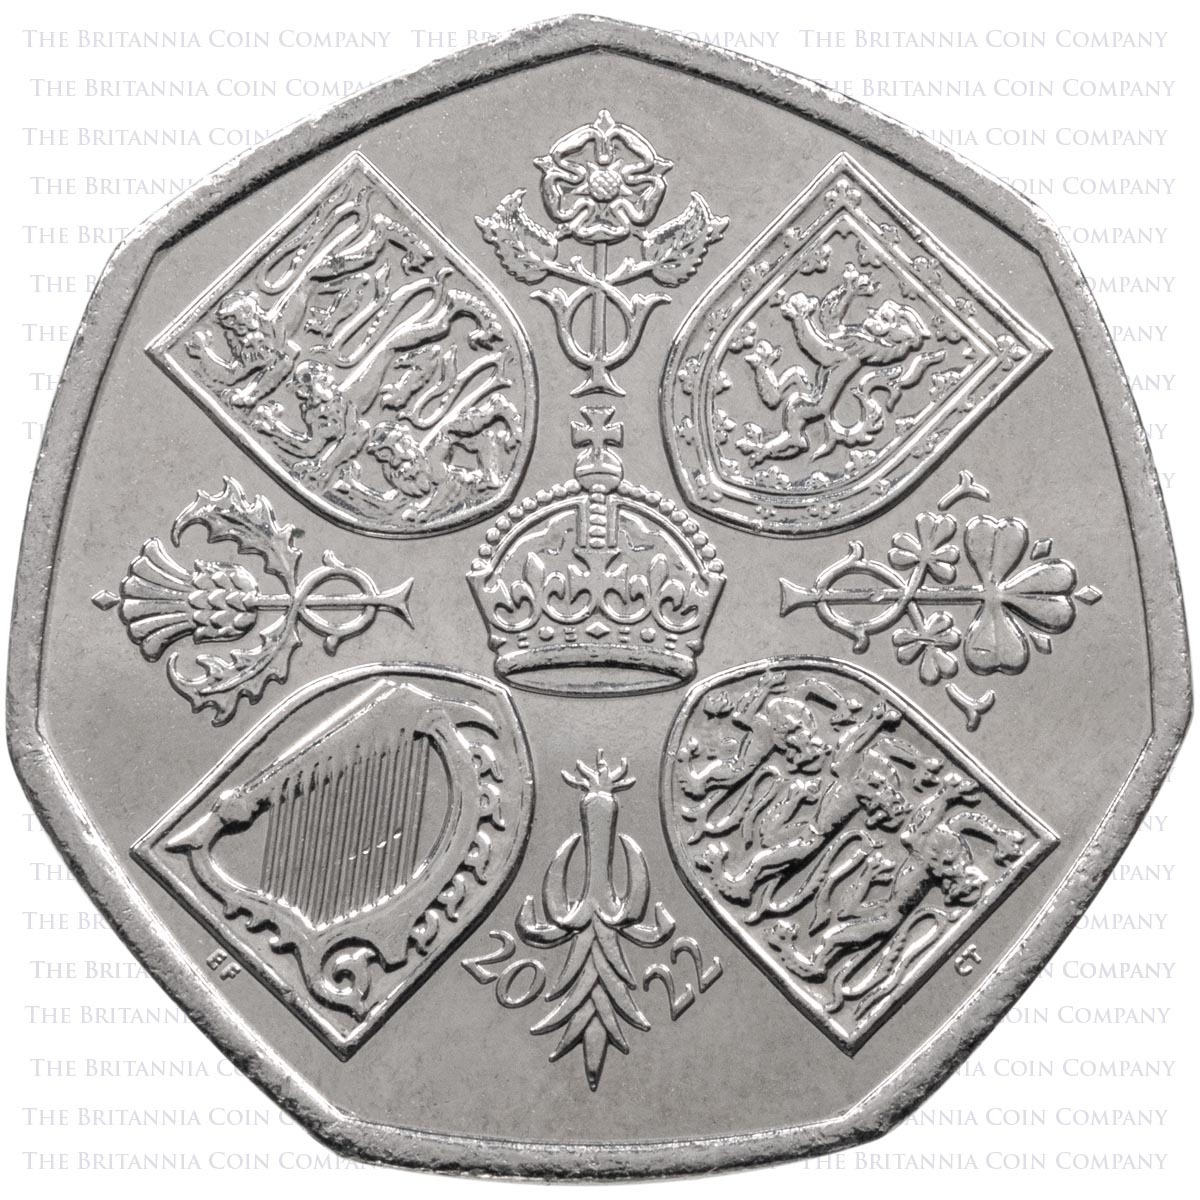 2022 Queen Elizabeth II Memorial Circulated Fifty Pence Coin Reverse